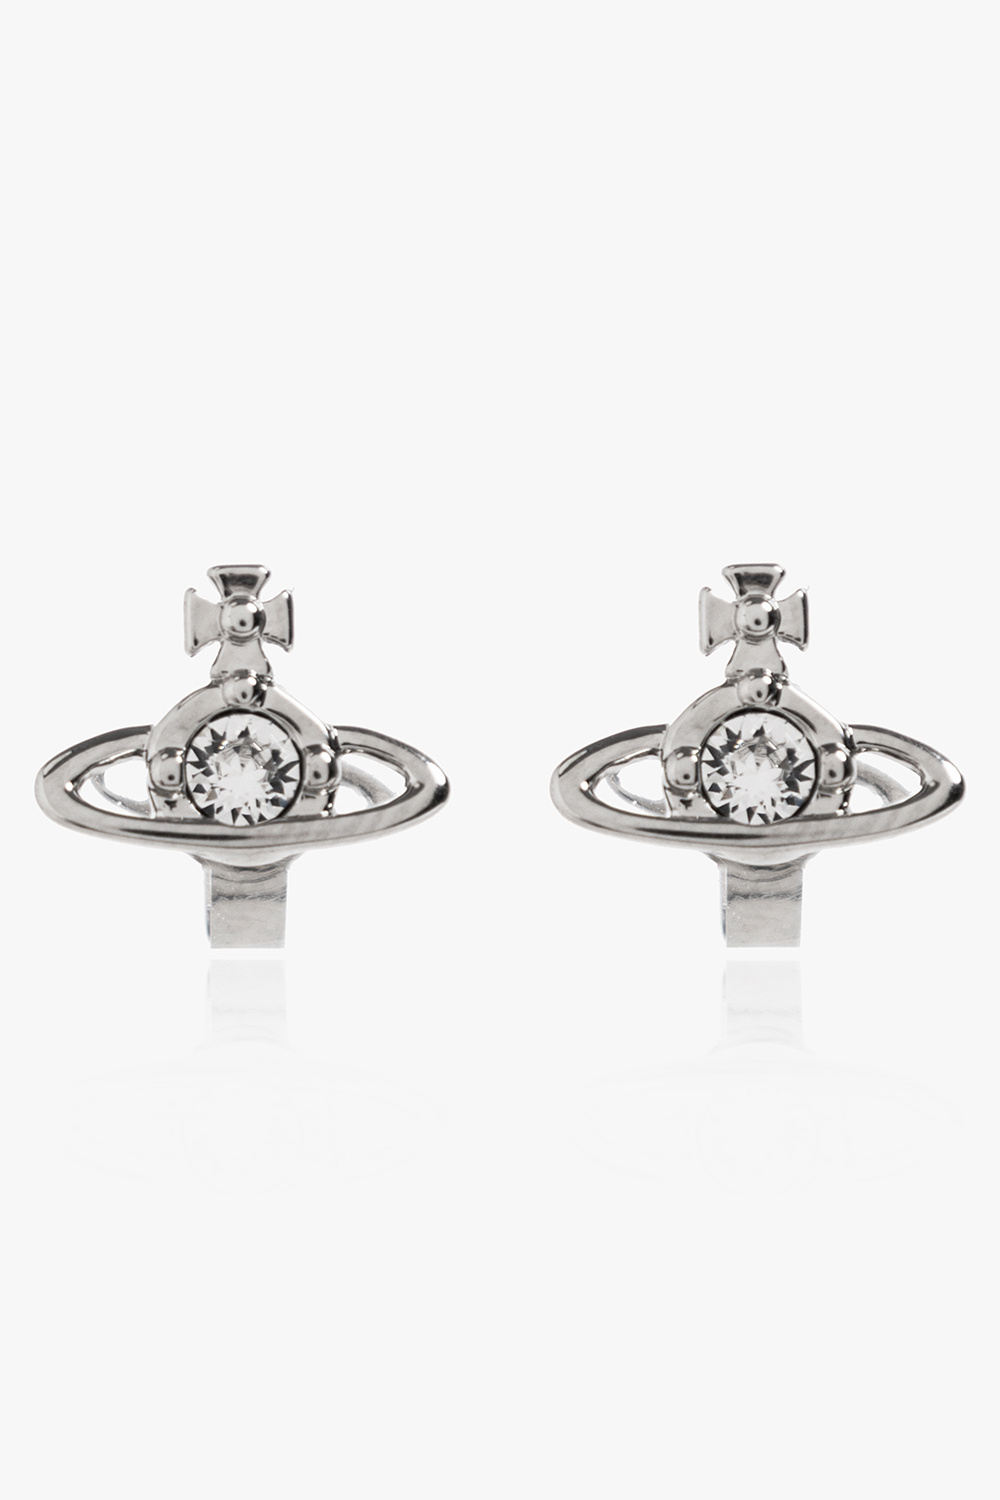 Vivienne Westwood ‘Nano Solitaire’ earrings